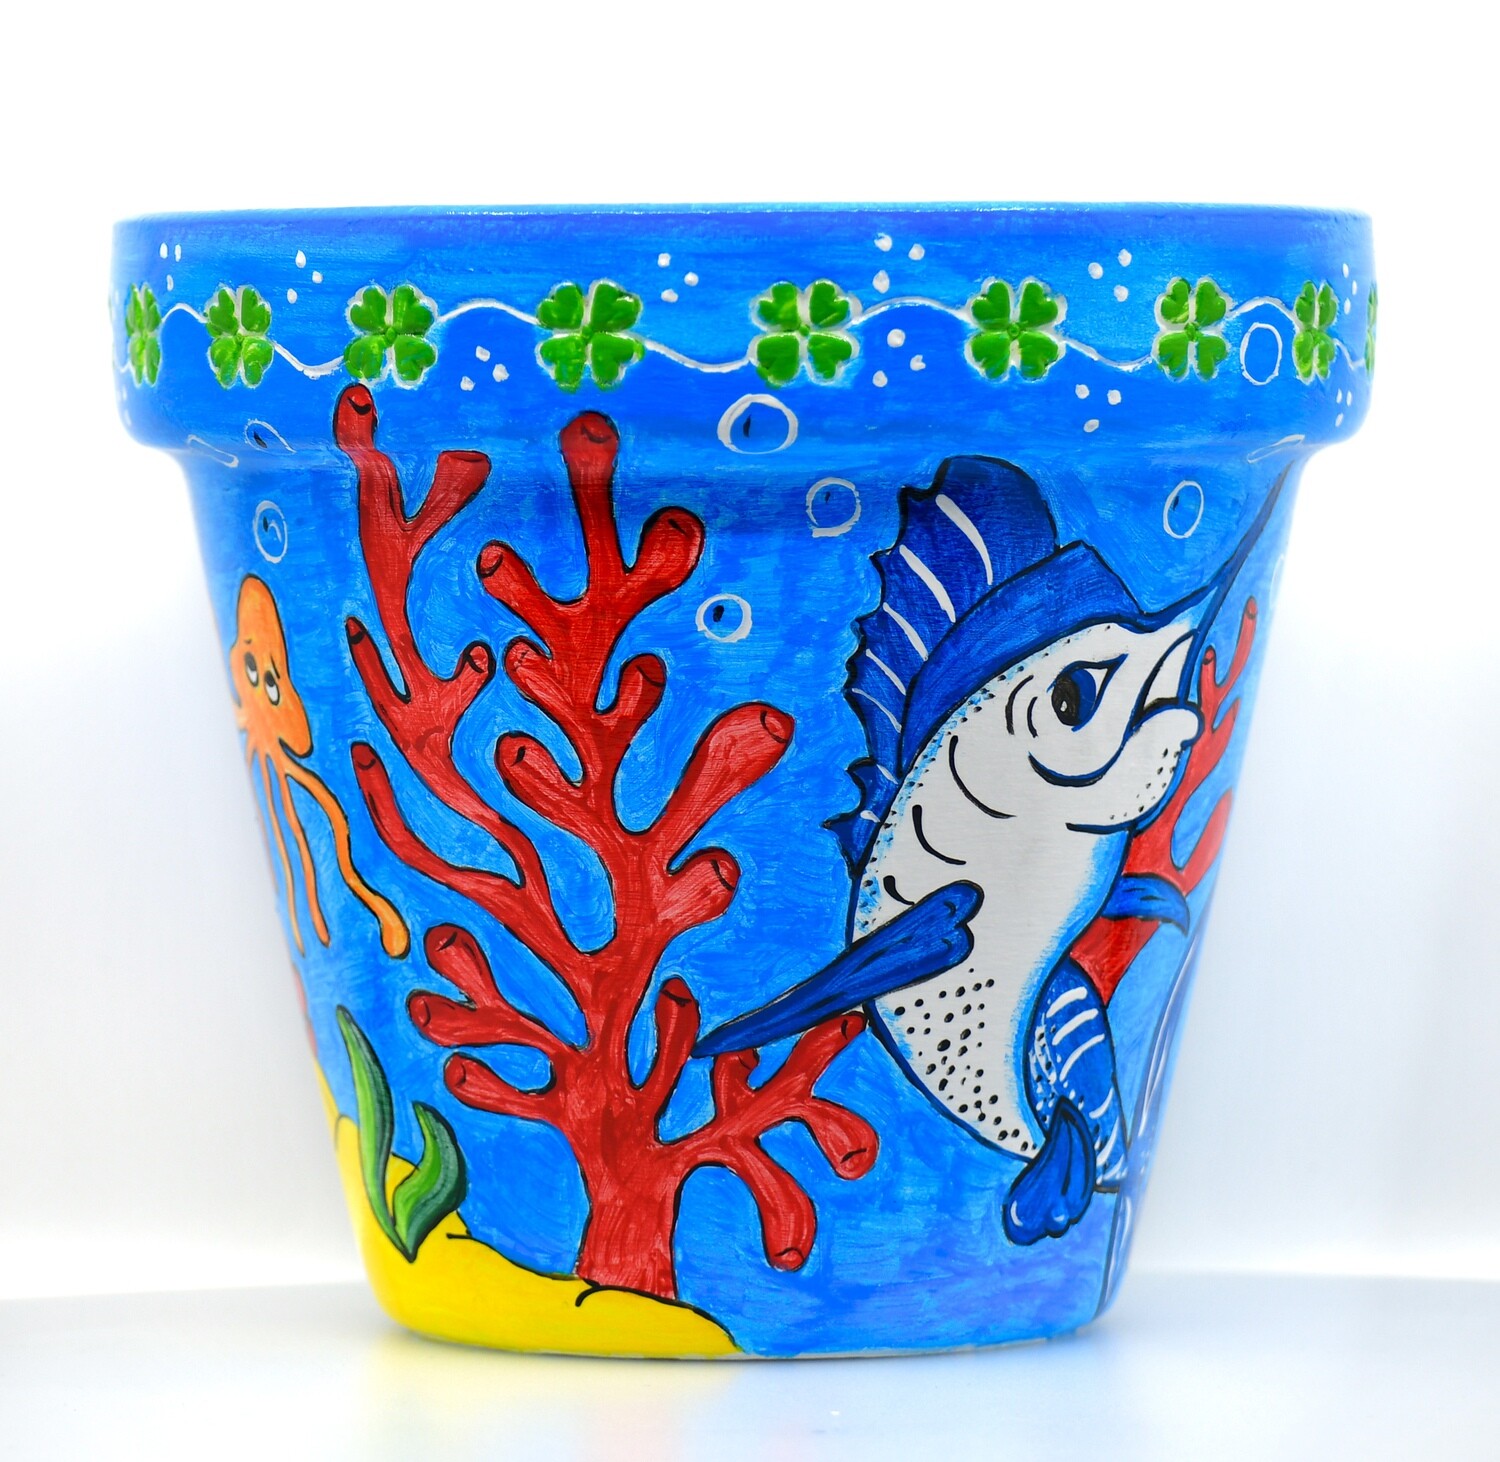 "Regno sottomarino" hand painted ceramic planter